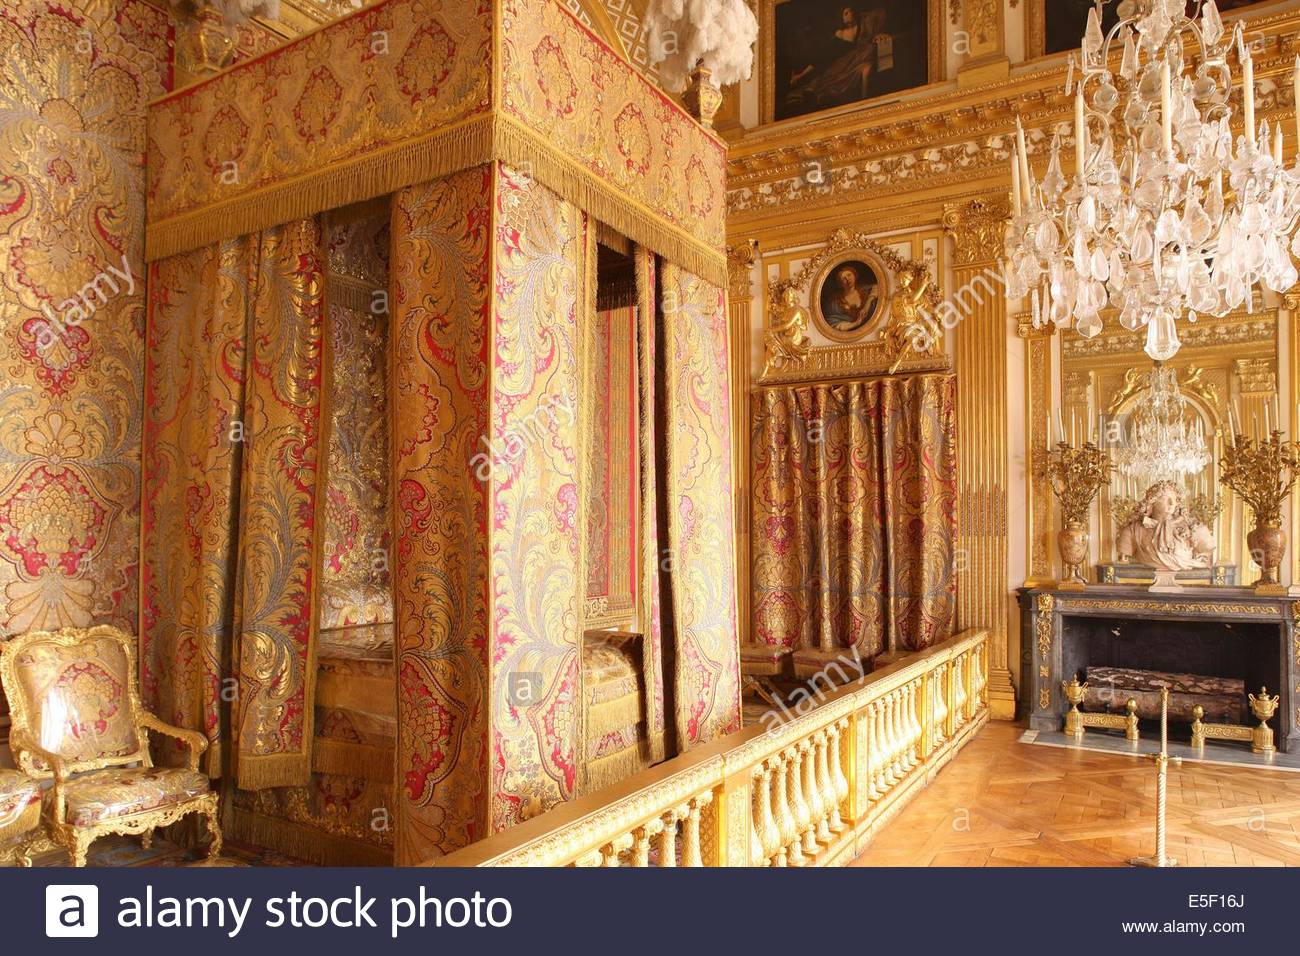 chteau-de-versailles-the-kings-bedroom-E5F16J.jpg